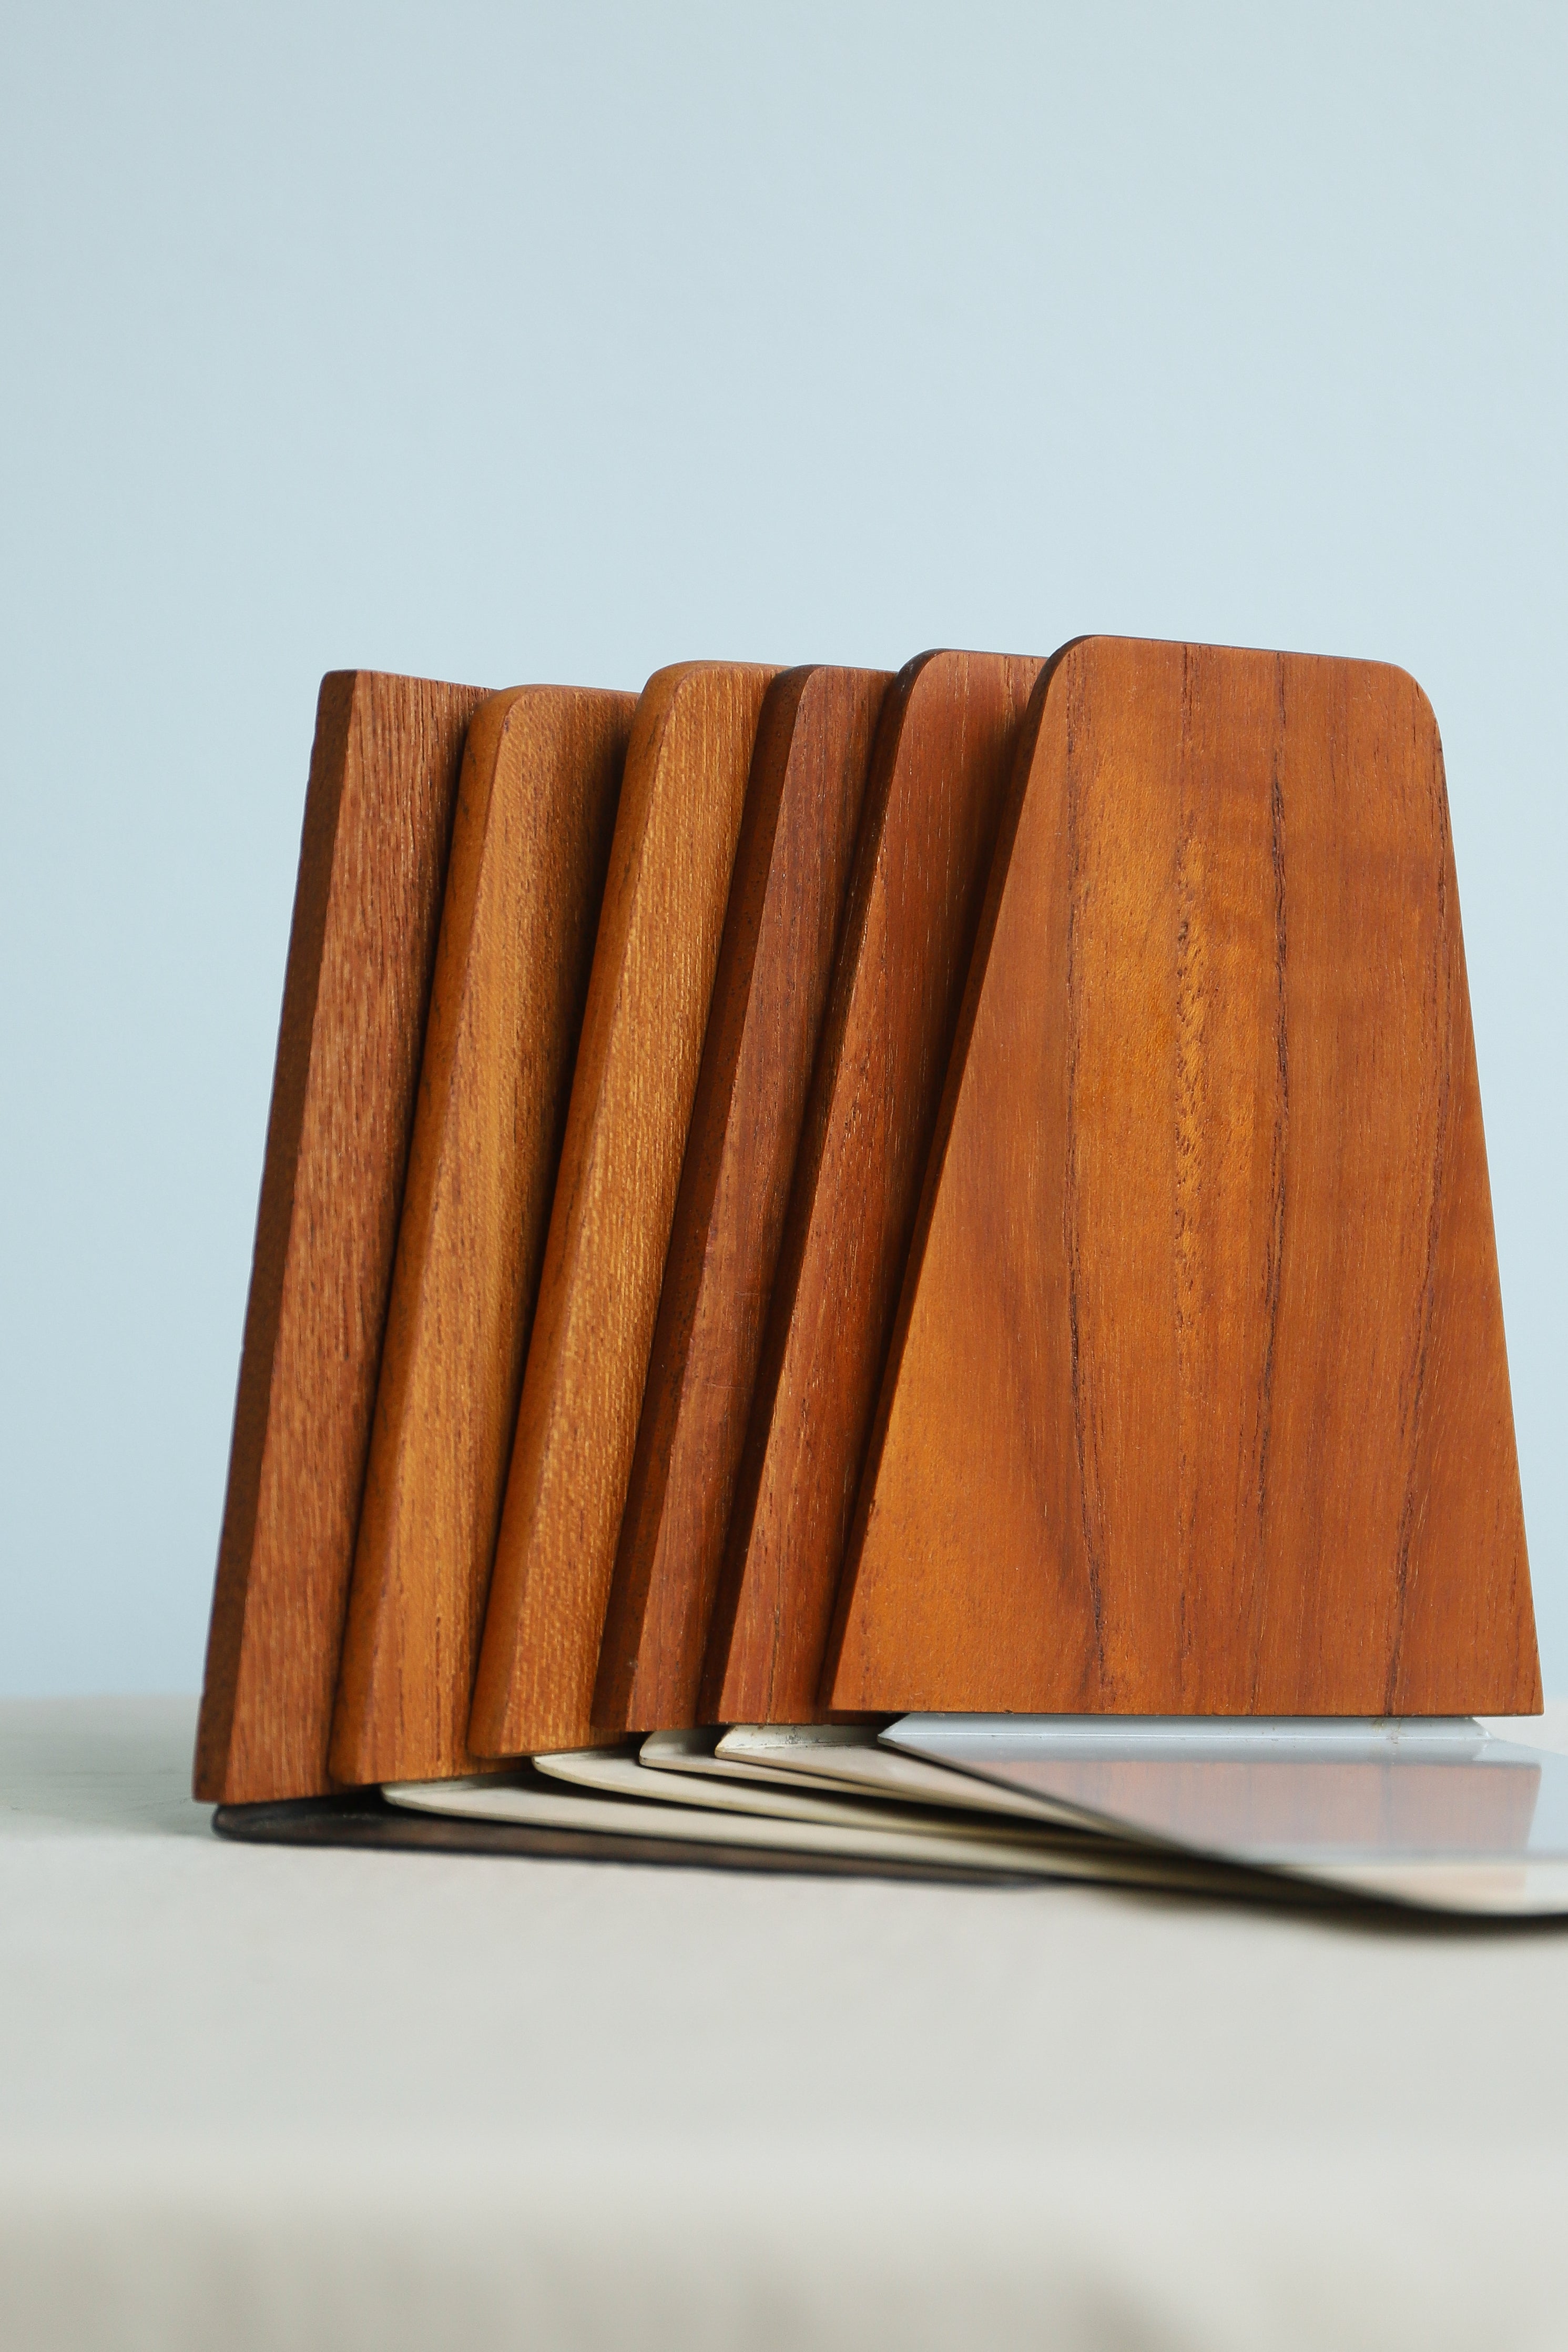 Wooden Bookend Danish Vintage/デンマークヴィンテージ ブックエンド 本立て チーク材 ローズウッド材 オーク材 北欧インテリア